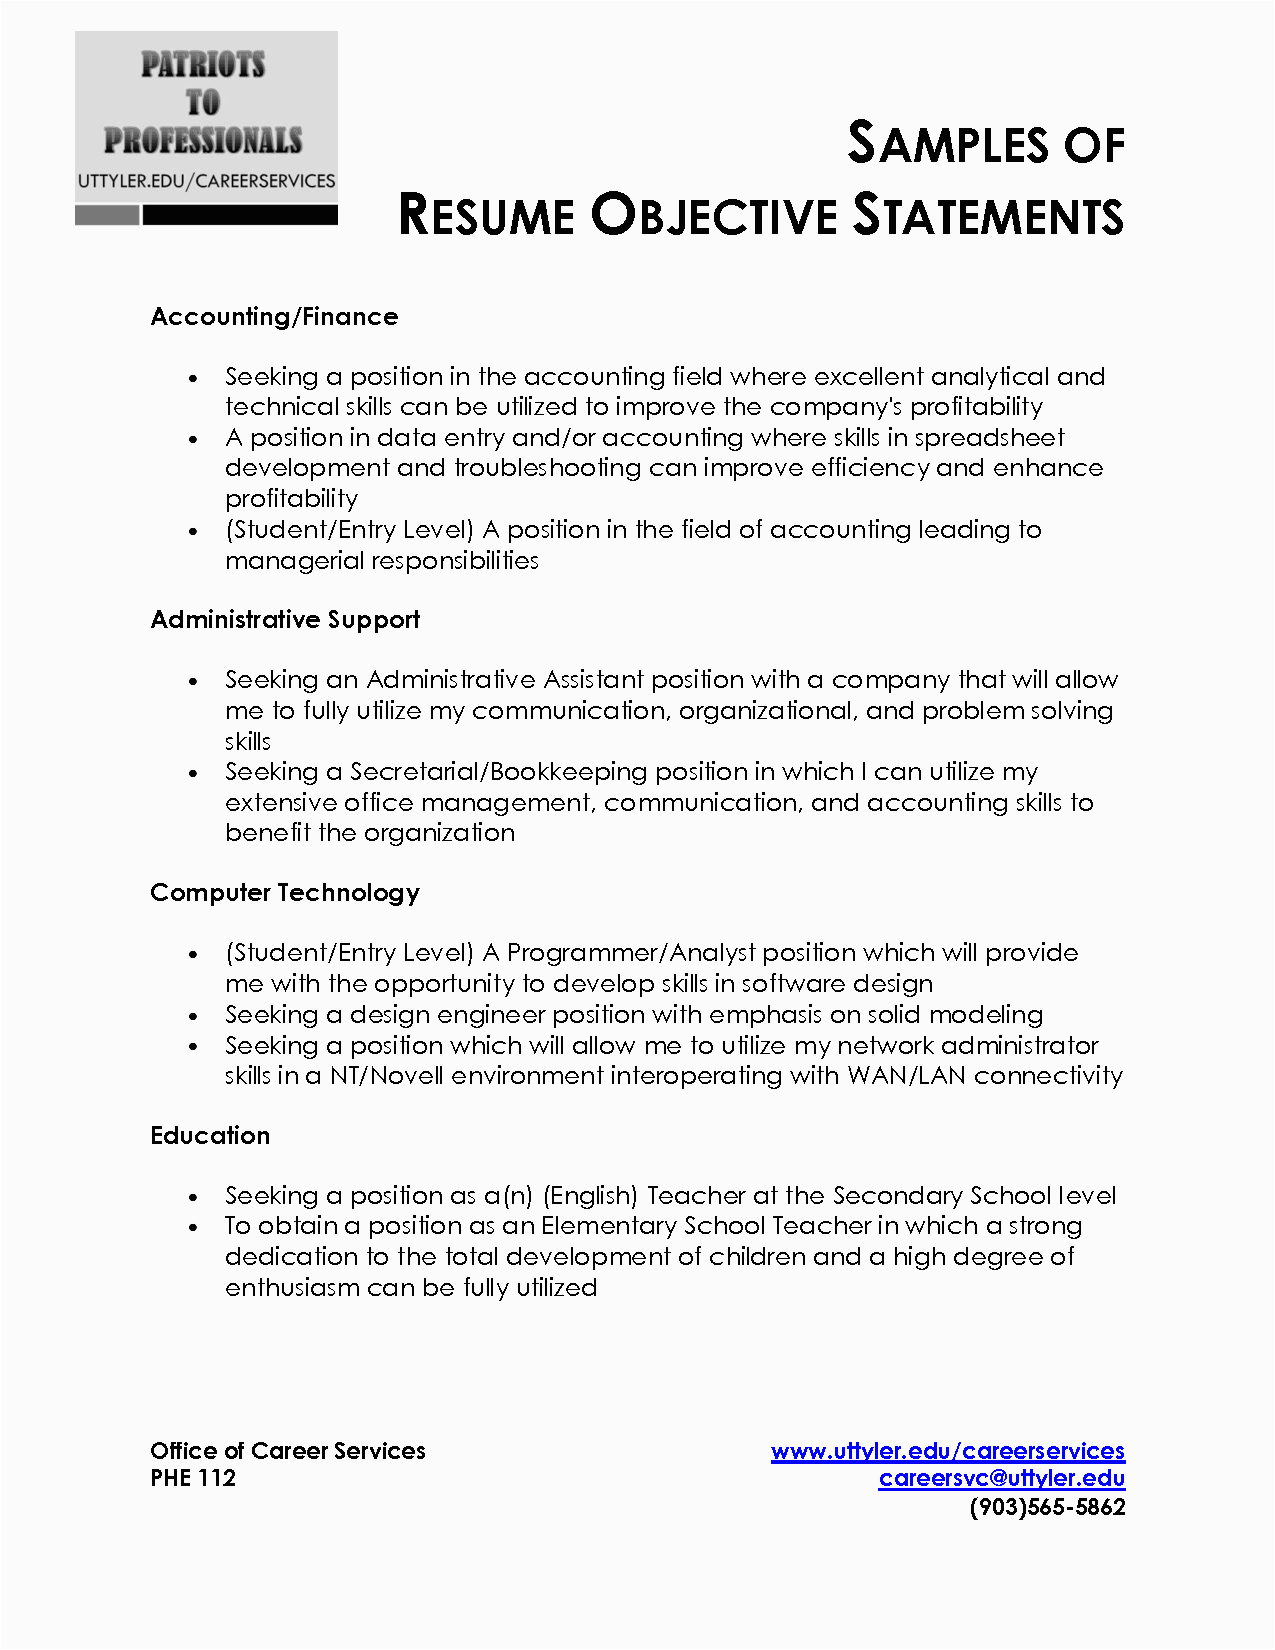 resume objective statement 2603